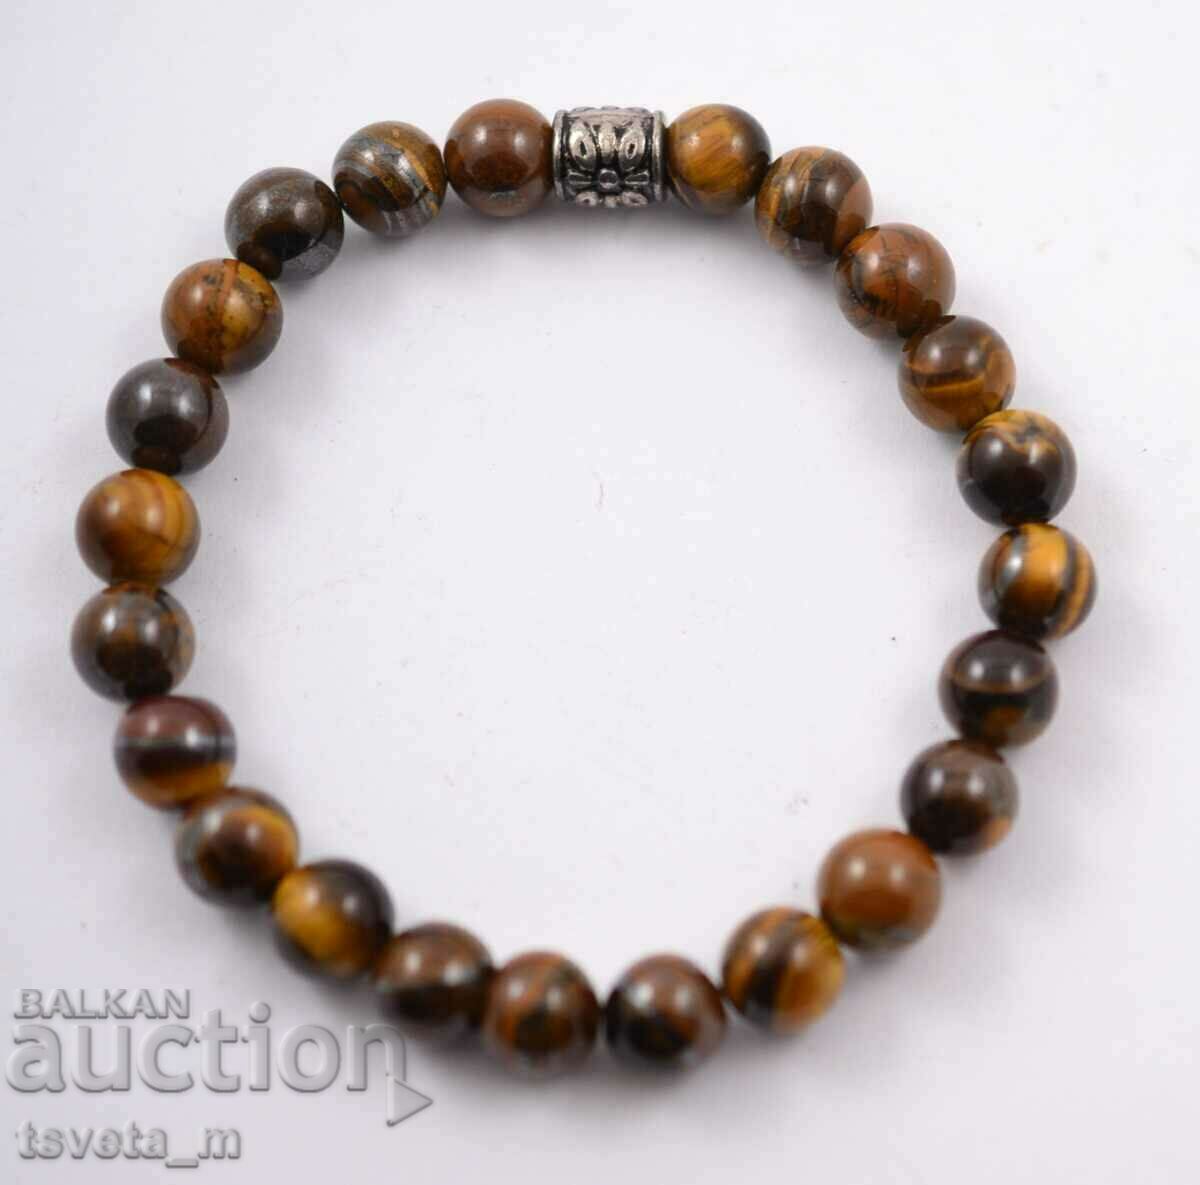 Bracelet with semi-precious natural stones Tiger's eye